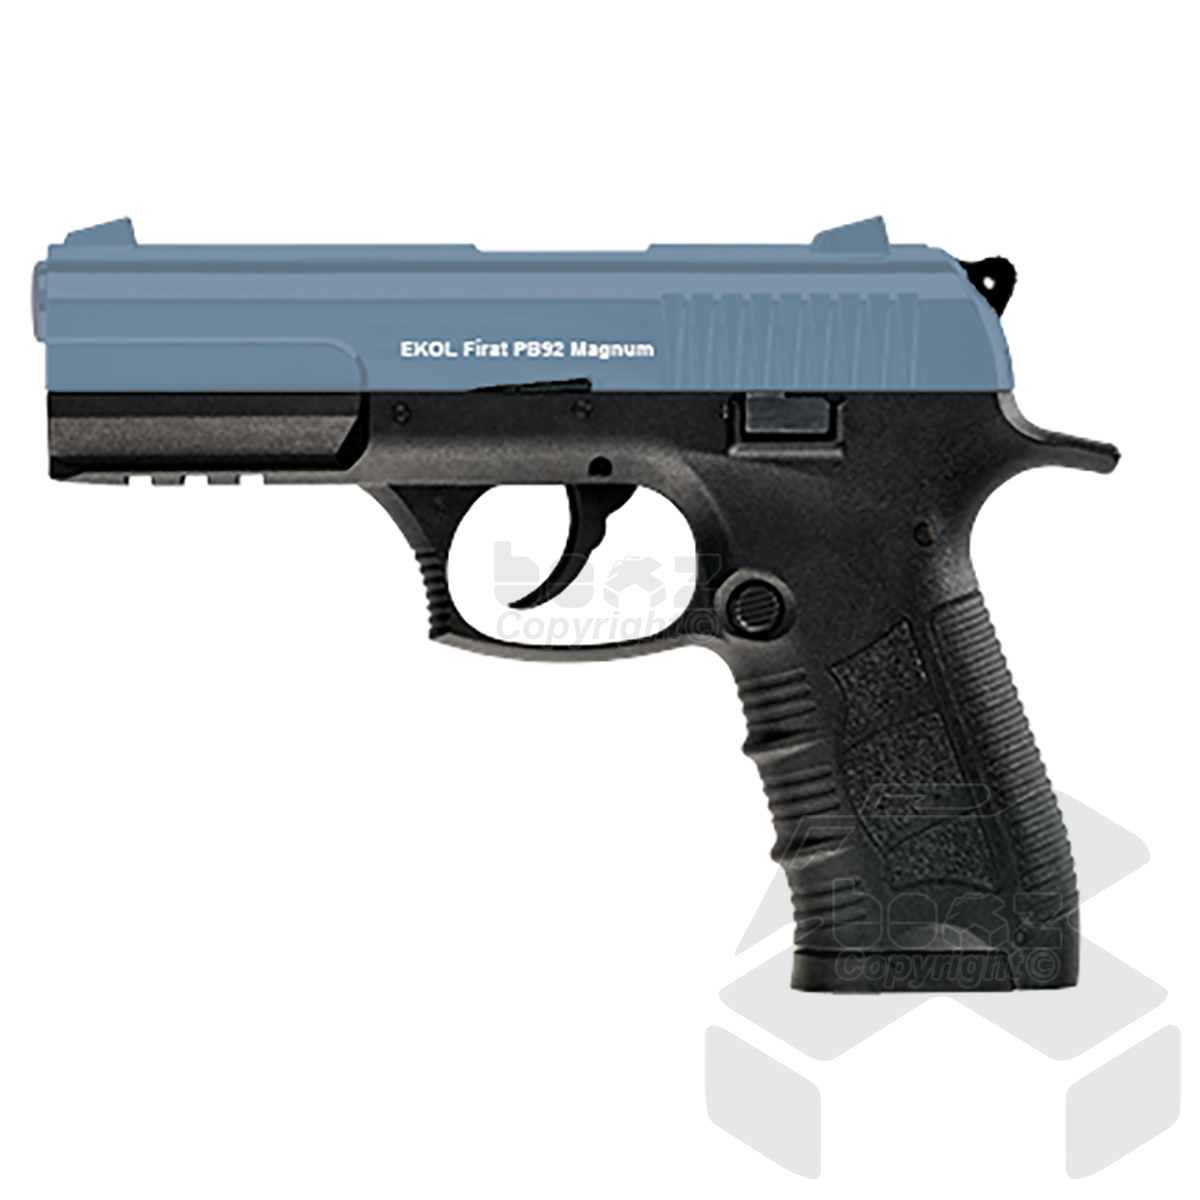 Ekol Firat PB92 Magnum Blank Firing Pistol - 9mm